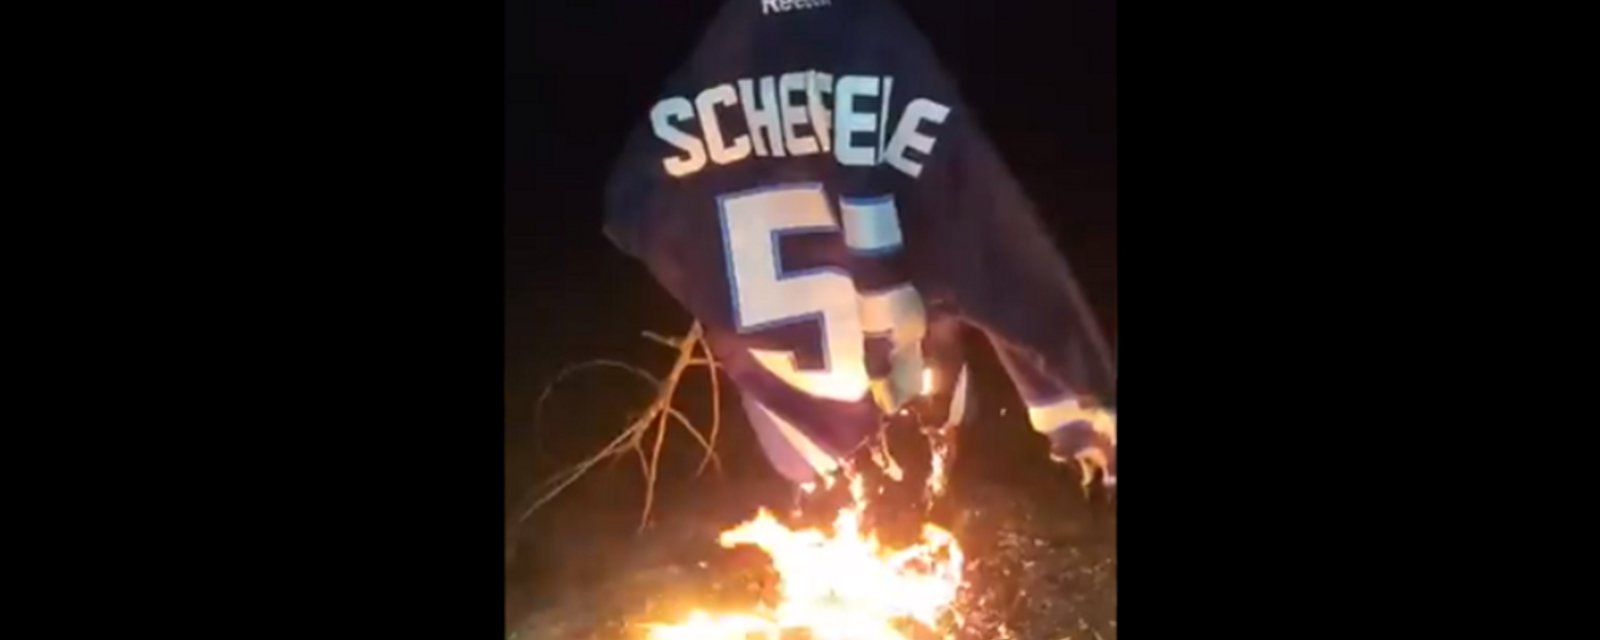 Fan burns his Mark Scheifele jersey after last night's devastating hit on Jake Evans